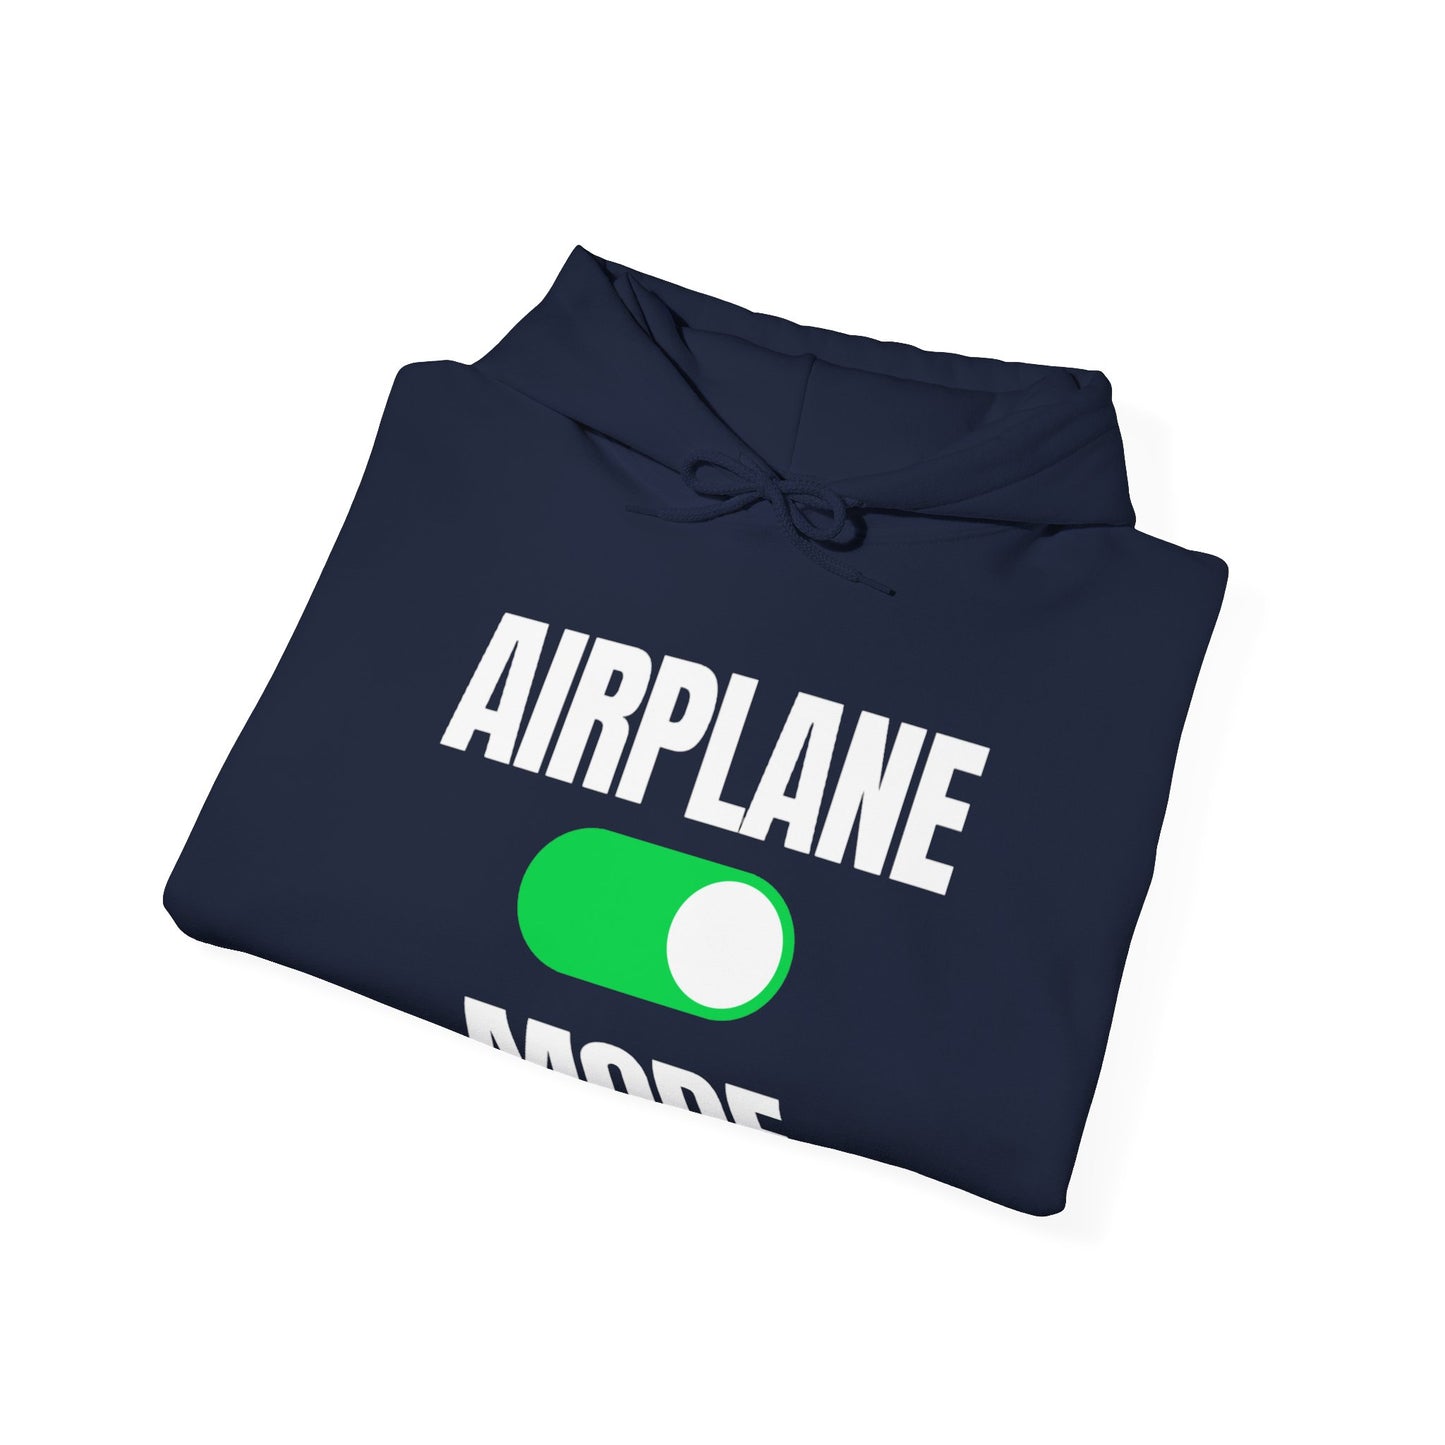 Airplane mode hoodie